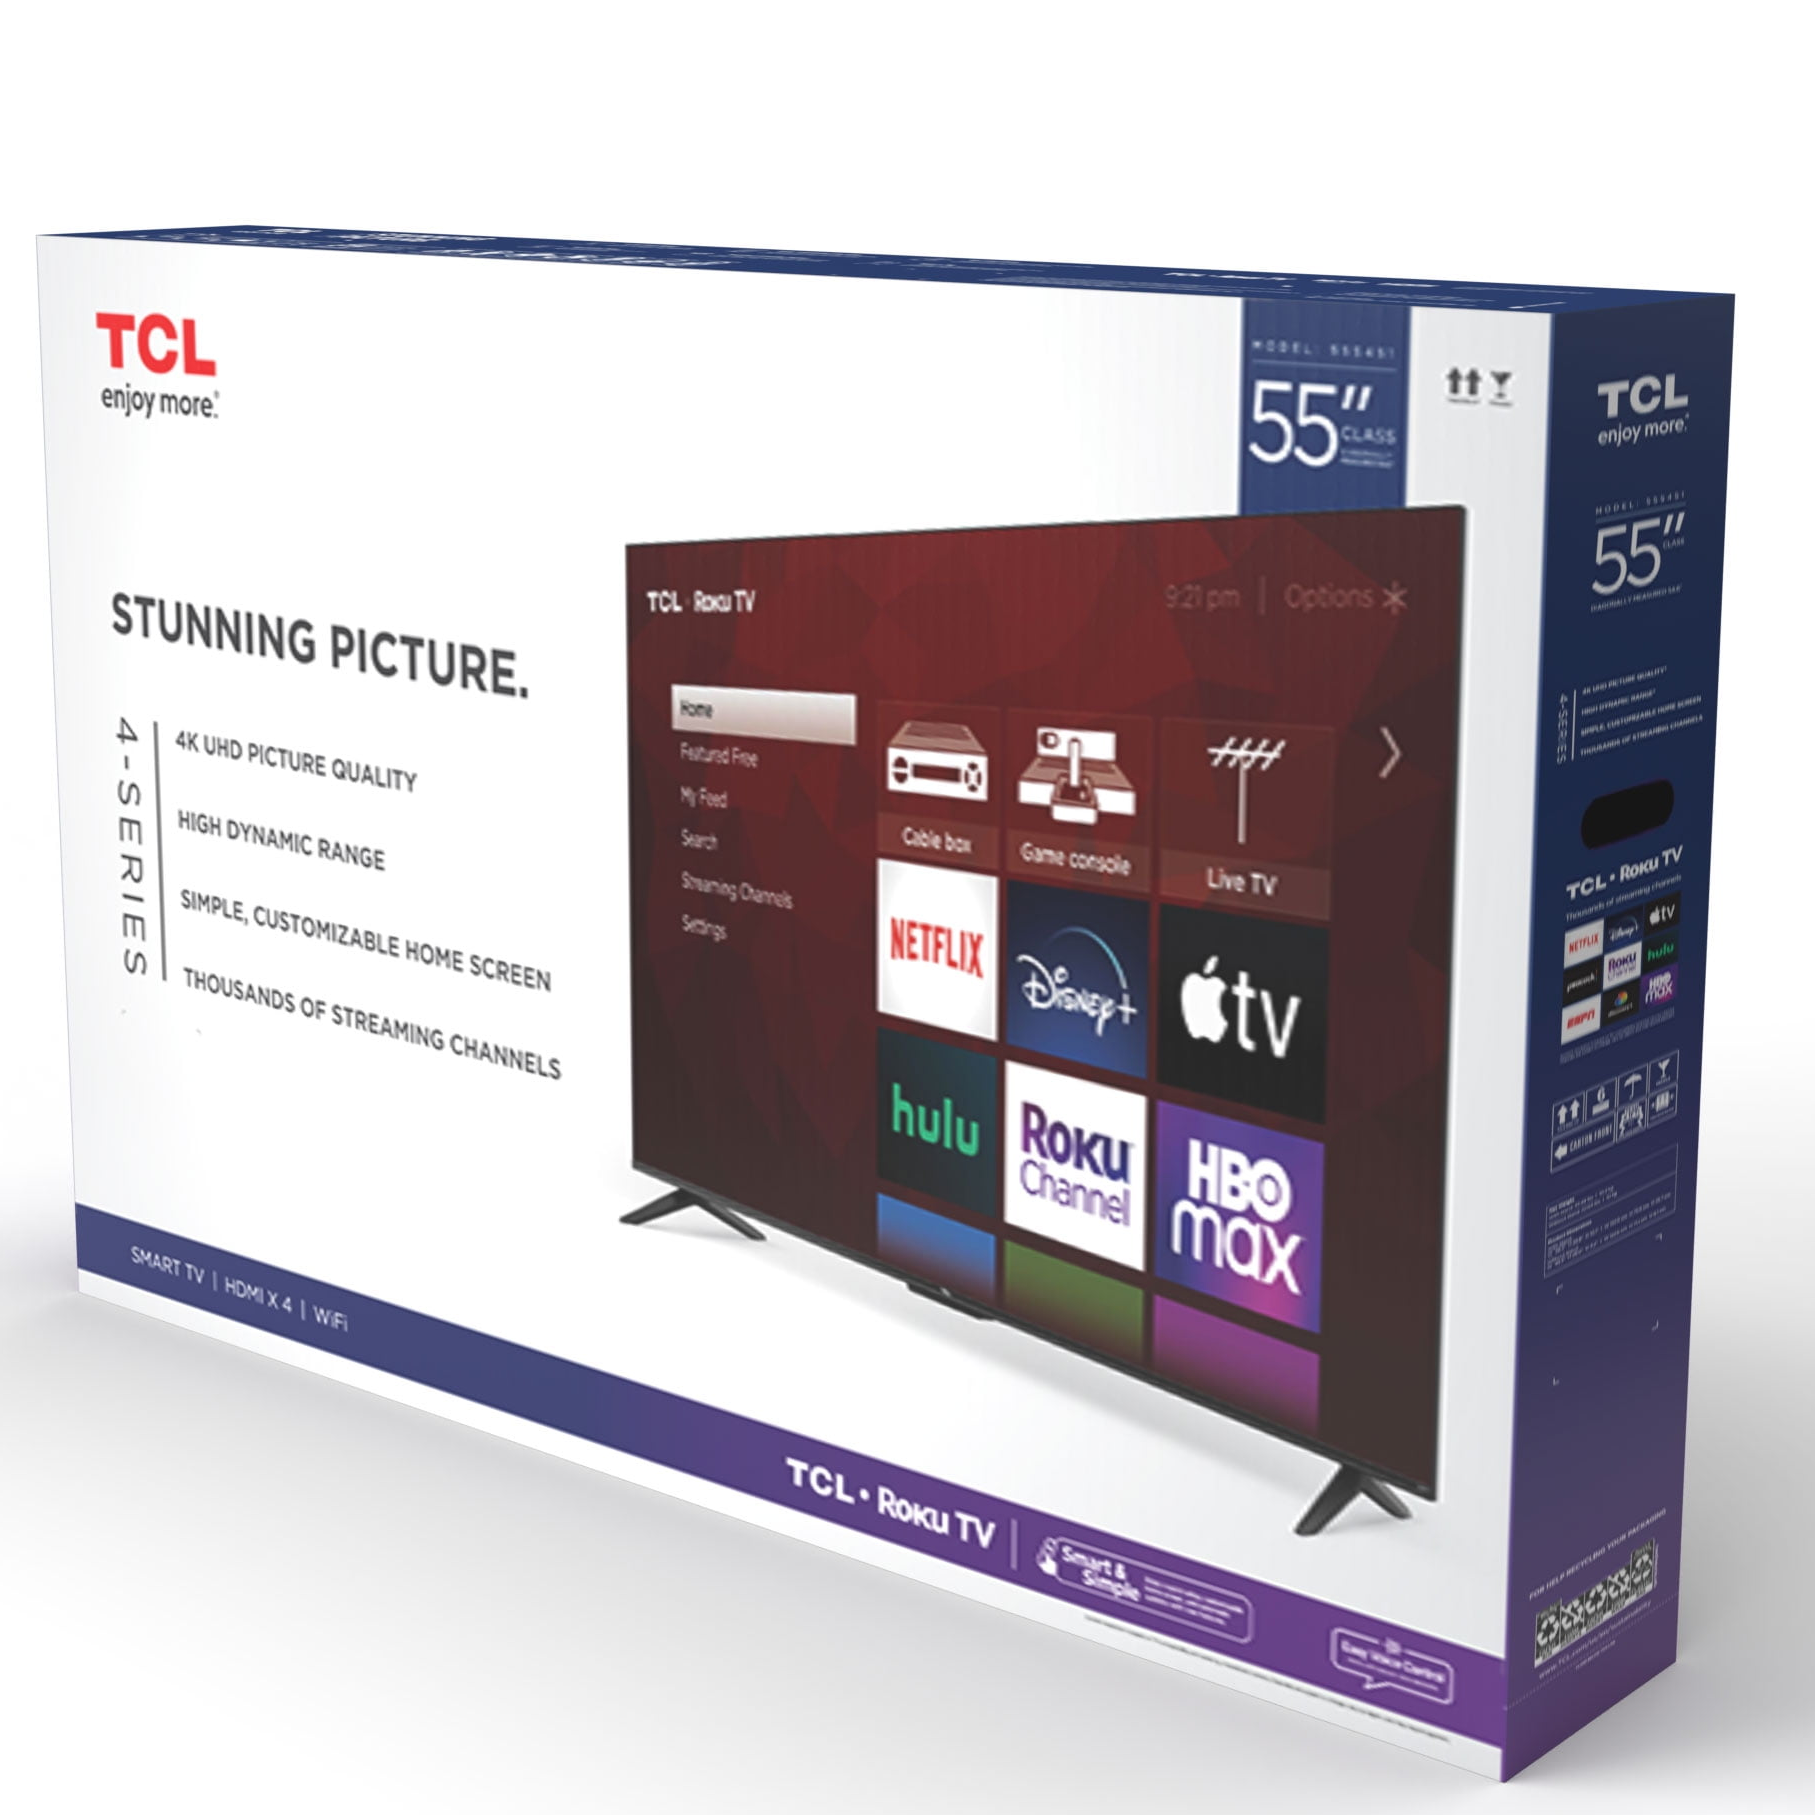 TCL 55" Class 4-Series 4K UHD HDR Smart Roku TV - 55S451 - image 21 of 21